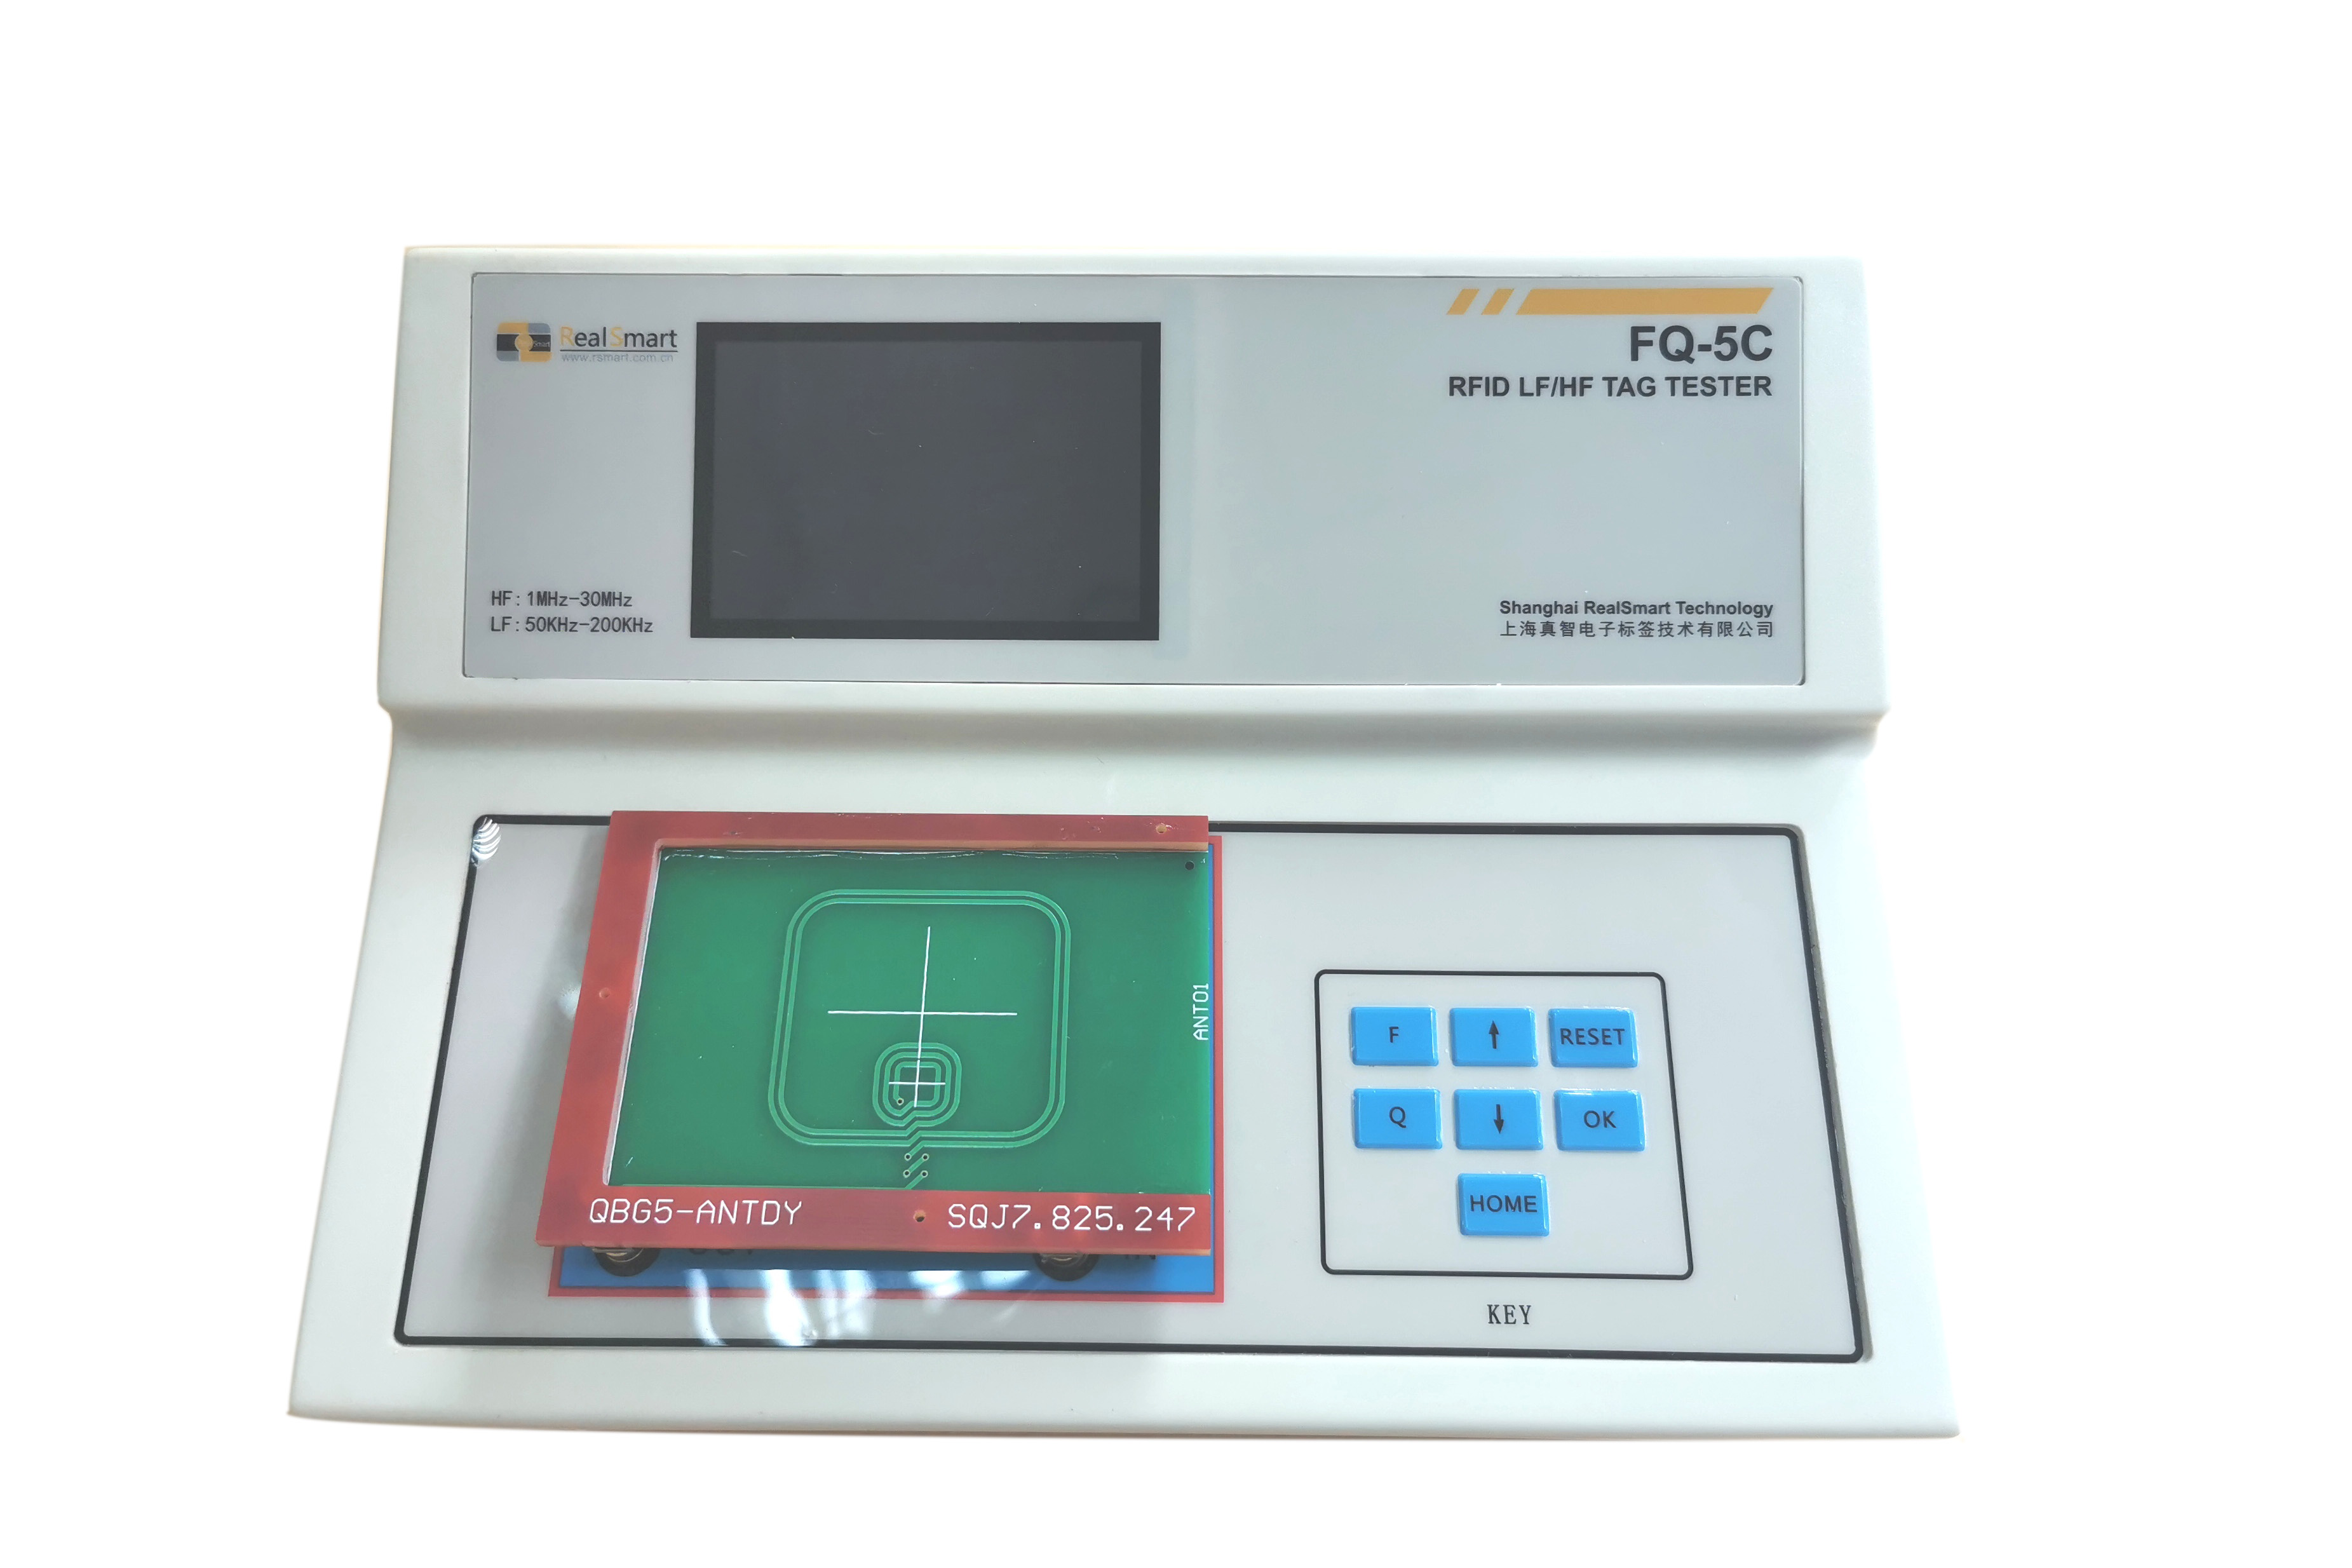 RFID HF/LF Tag Tester FQ-5C